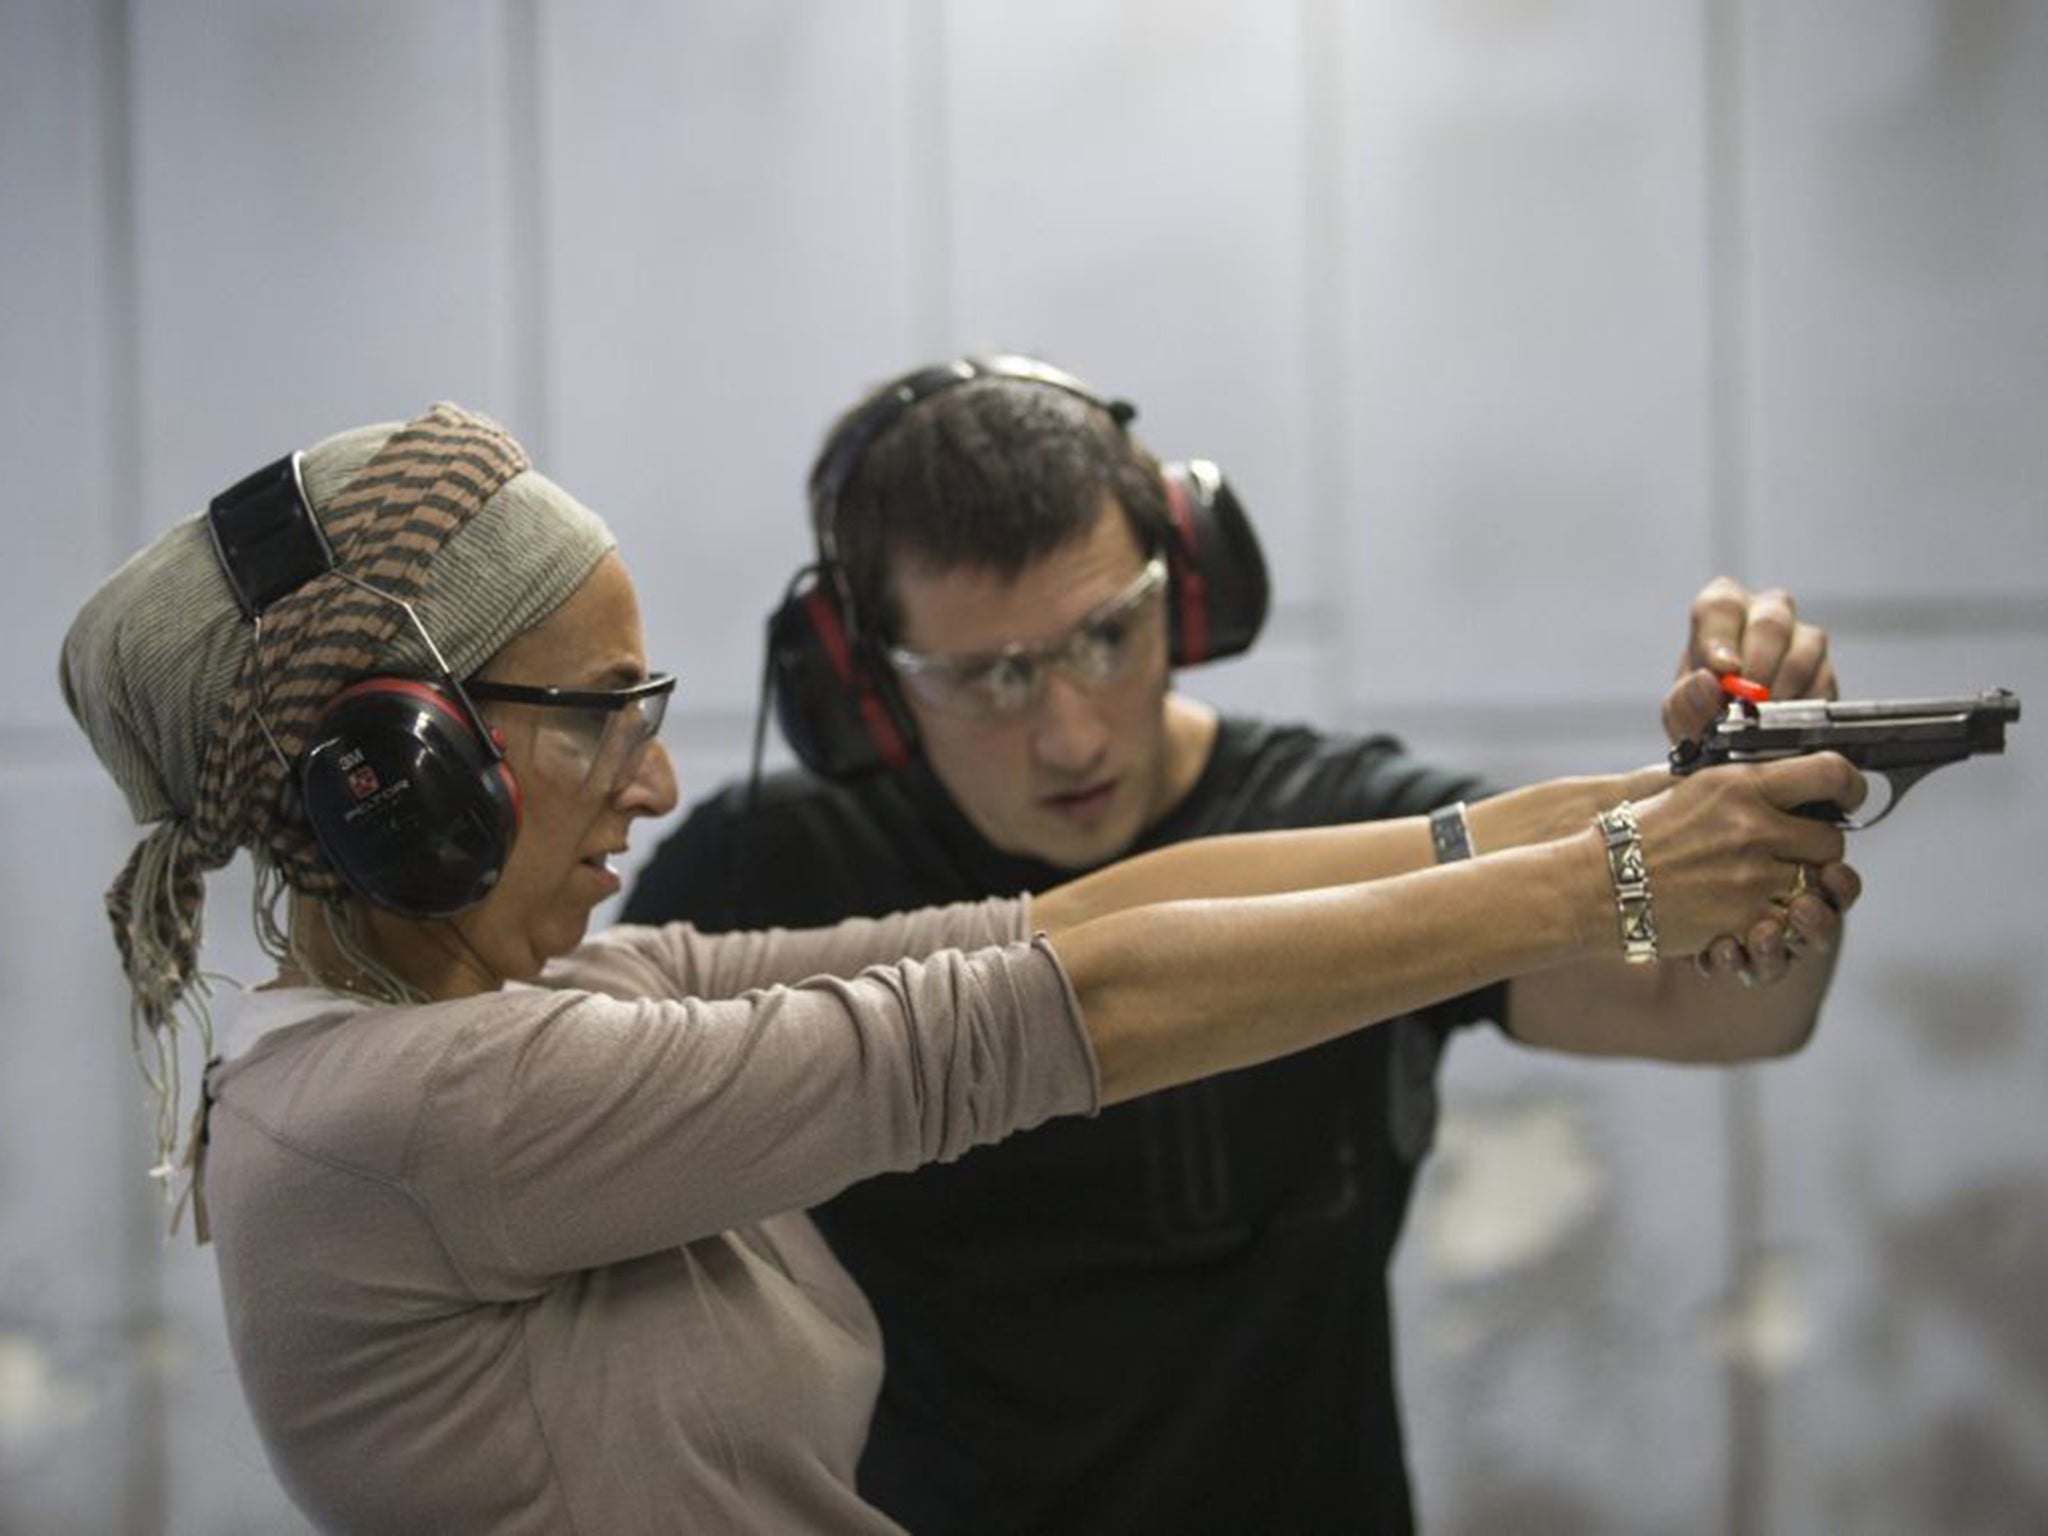 An Israeli Orthodox woman practising her skills at a shooting range in Jerusalem (EPA)